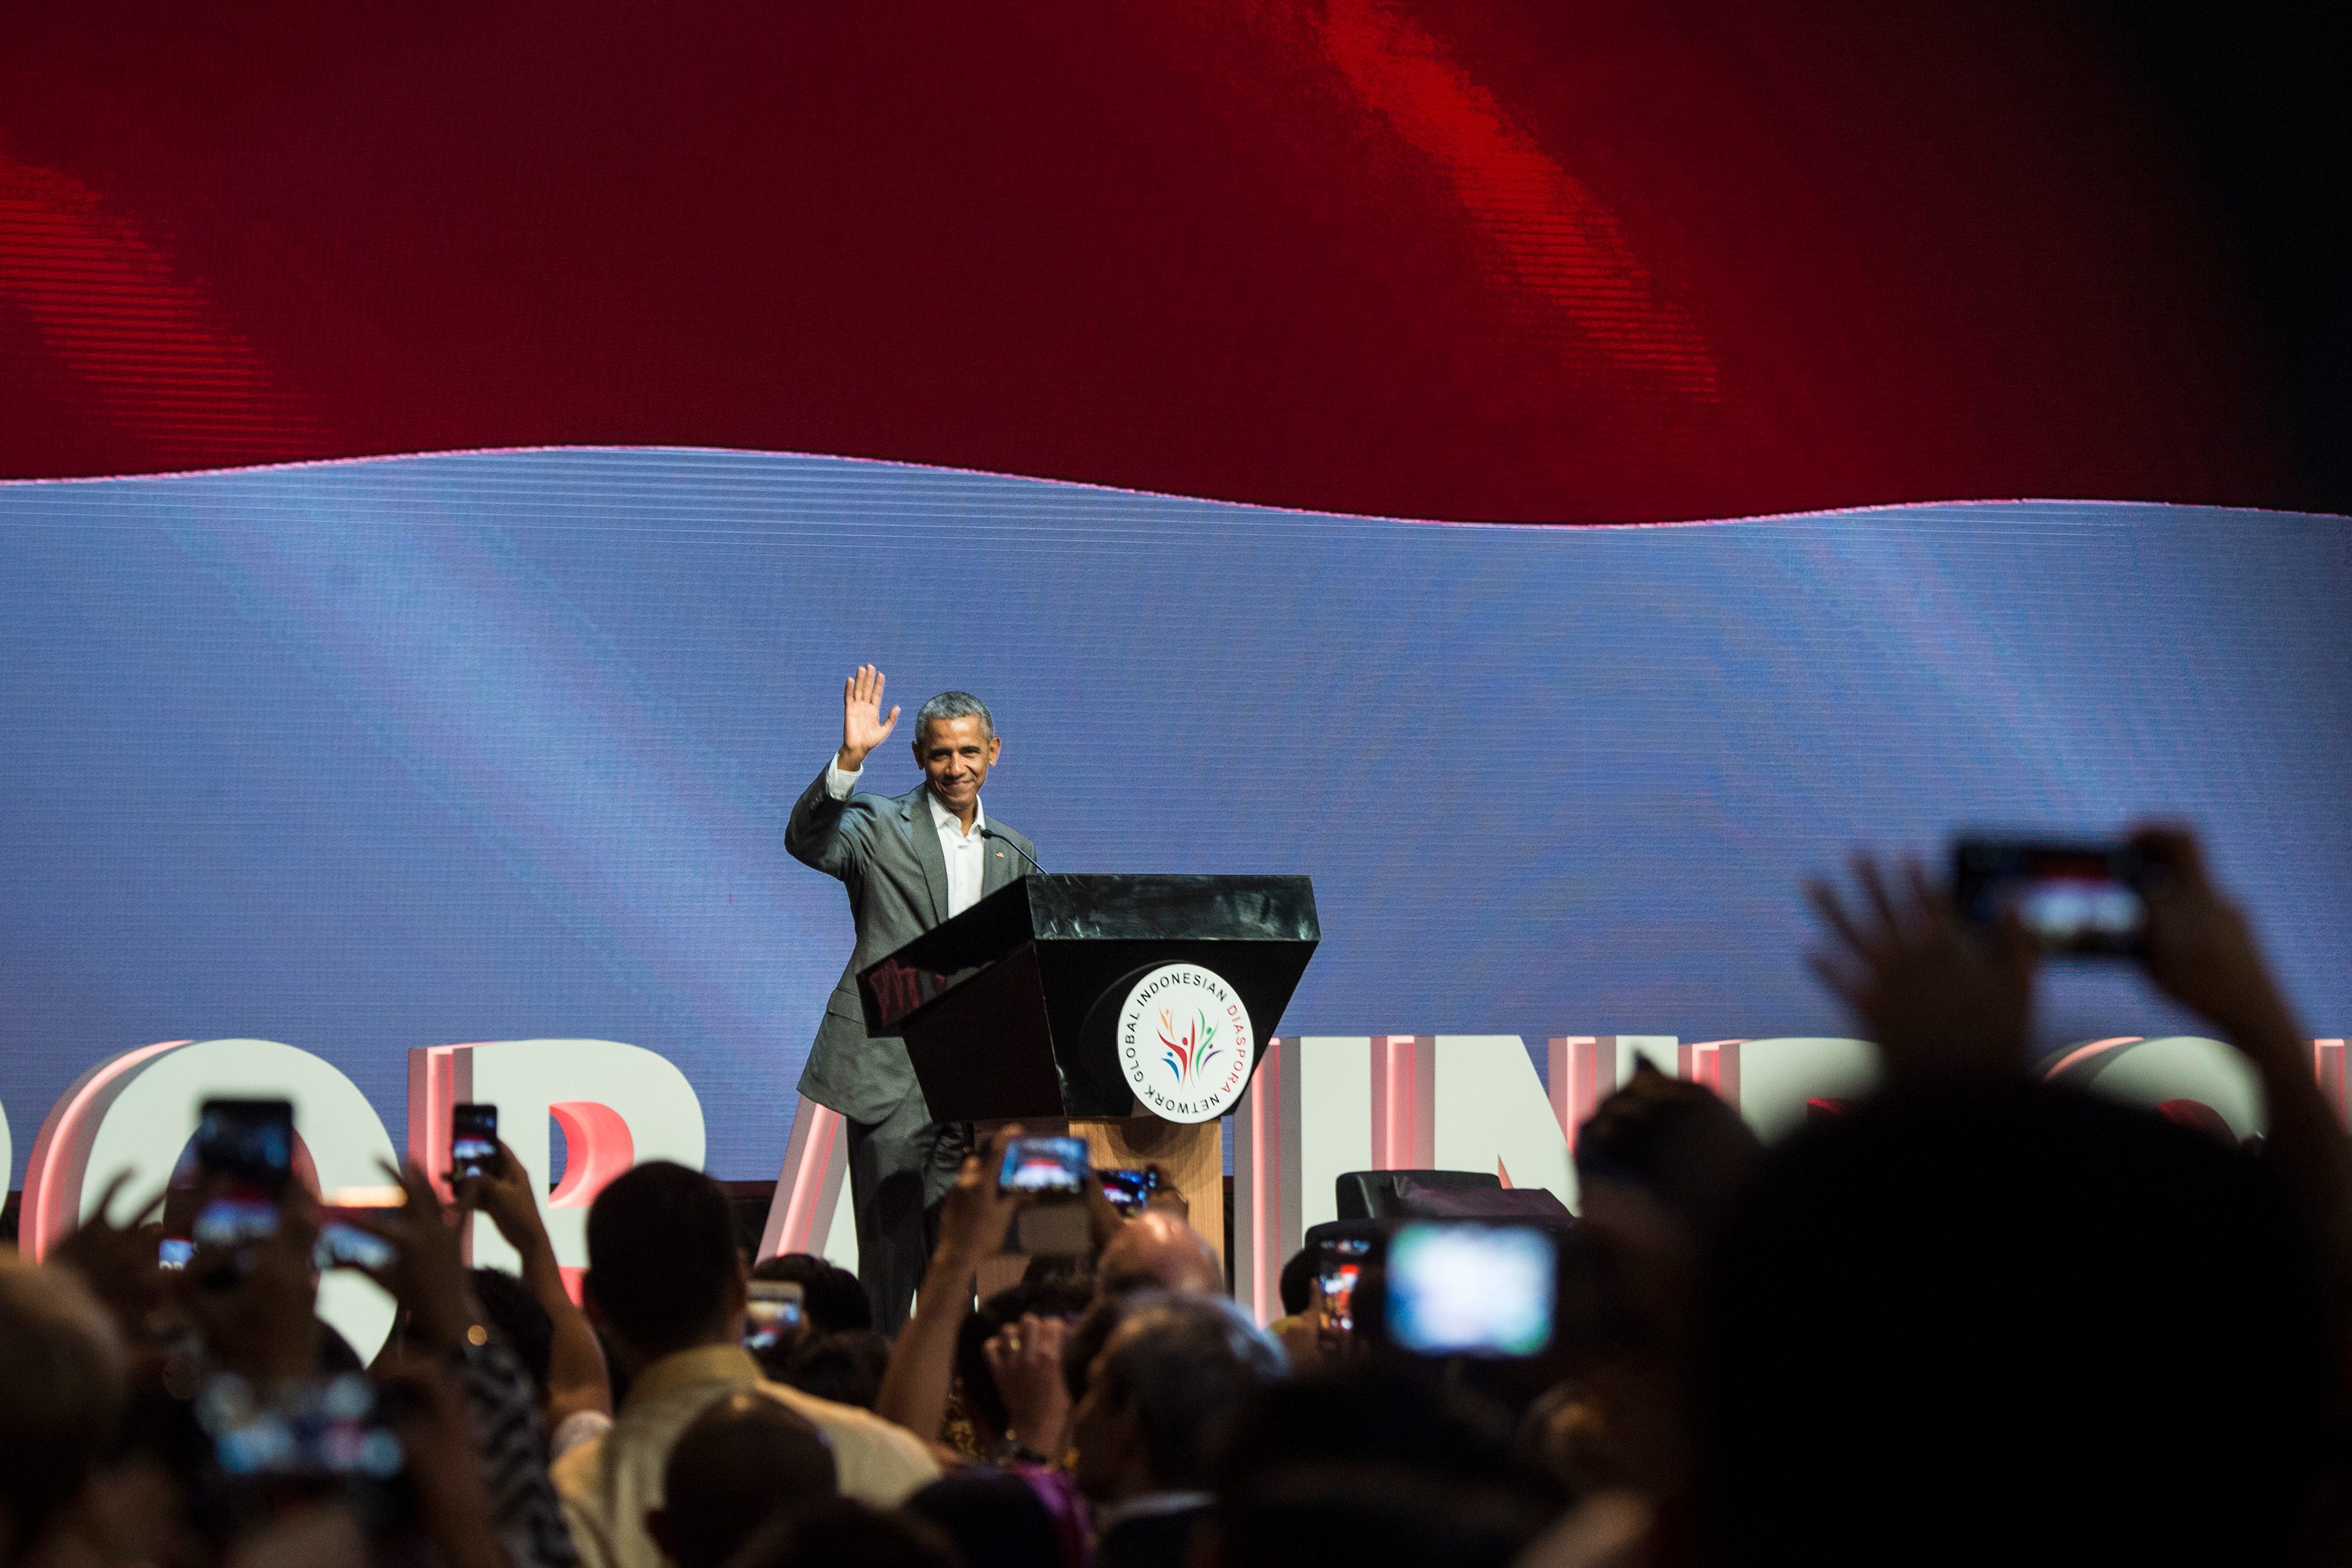 LAMBAIKAN TANGAN. Mantan Presiden Amerika Serikat Barack Obama melambaikan tangan saat akan memberi sambutan pada acara Kongres Diaspora Indonesia ke-4 di Jakarta, Sabtu, 1 Juli. Foto oleh Rosa Panggabean/ANTARA 